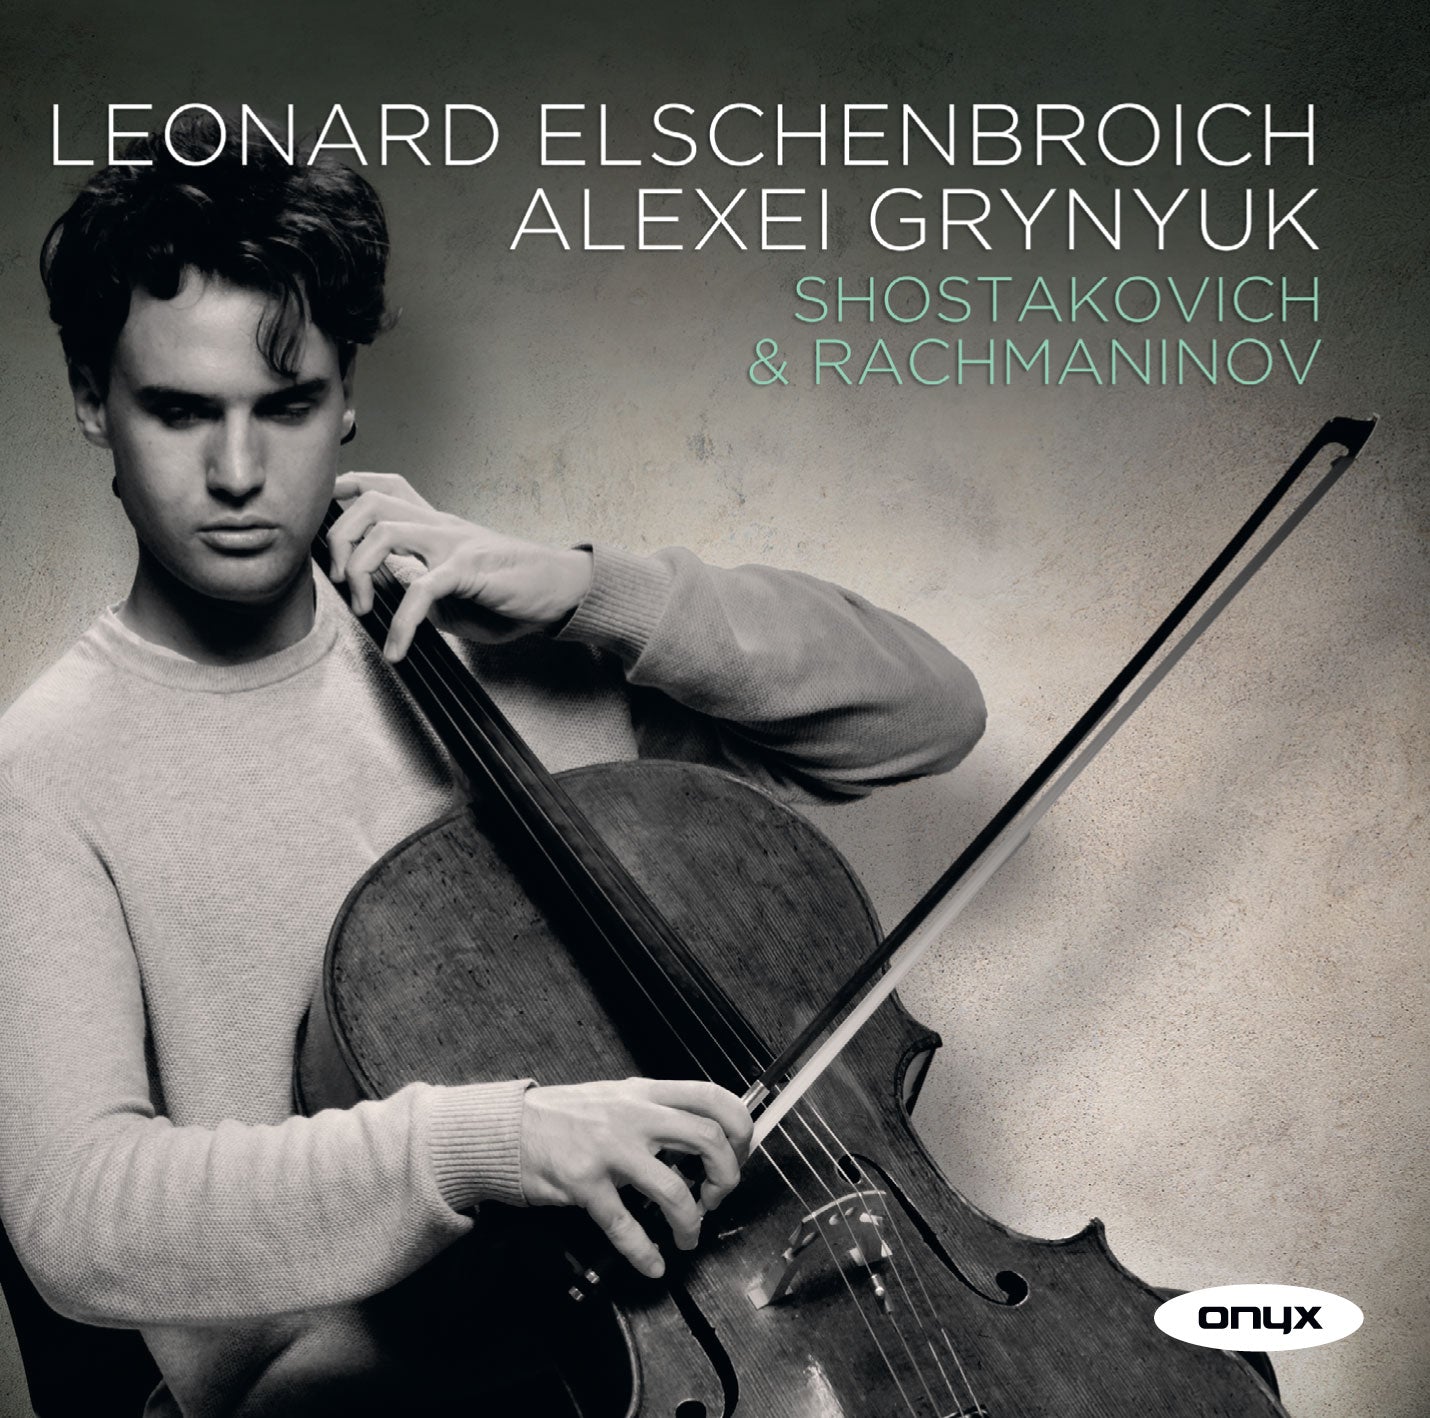 Rachmaninov: Cello Sonata; Shostakovich: Viola Sonata, Op. 147 (Arr. Cello) - Leonard Elschenbroich, Alexei Grynyuk